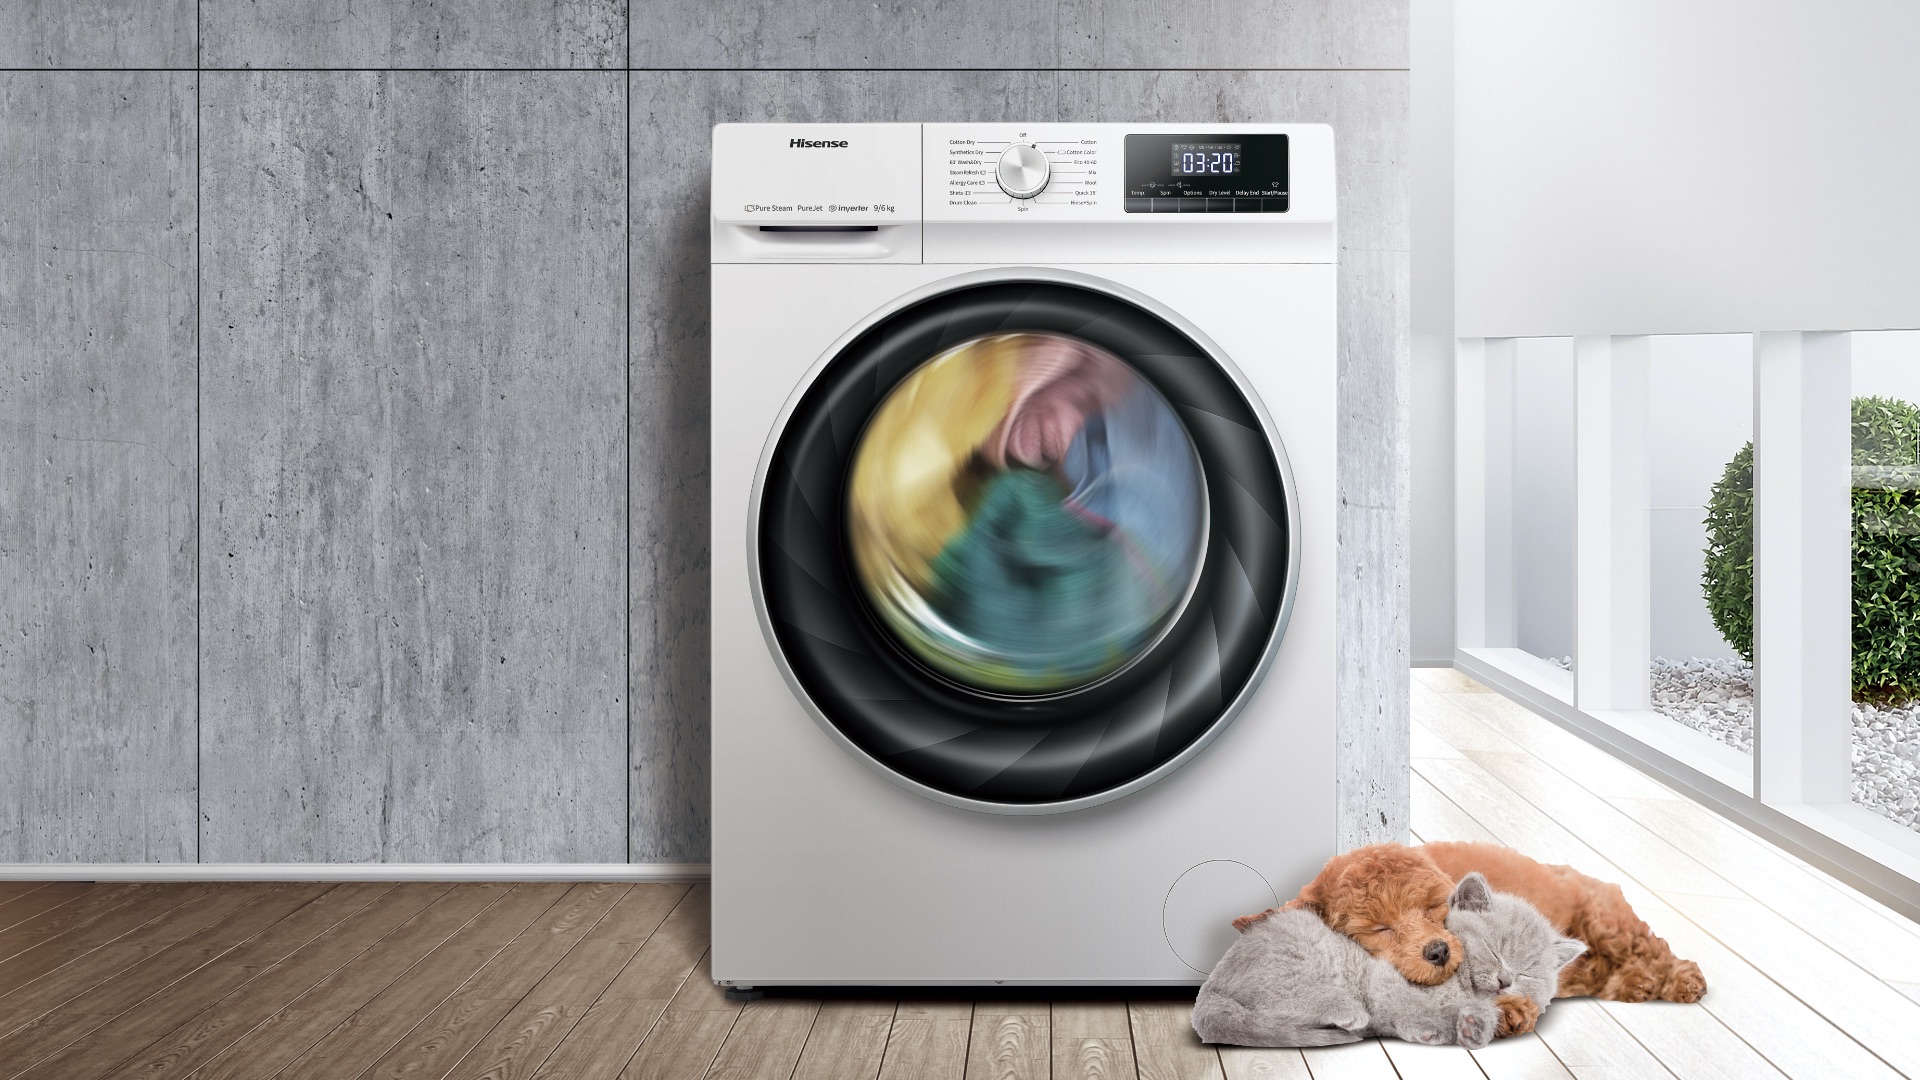 Hisense Washing Machine WFQY1014EVJM - Quiet, Energy Efficient